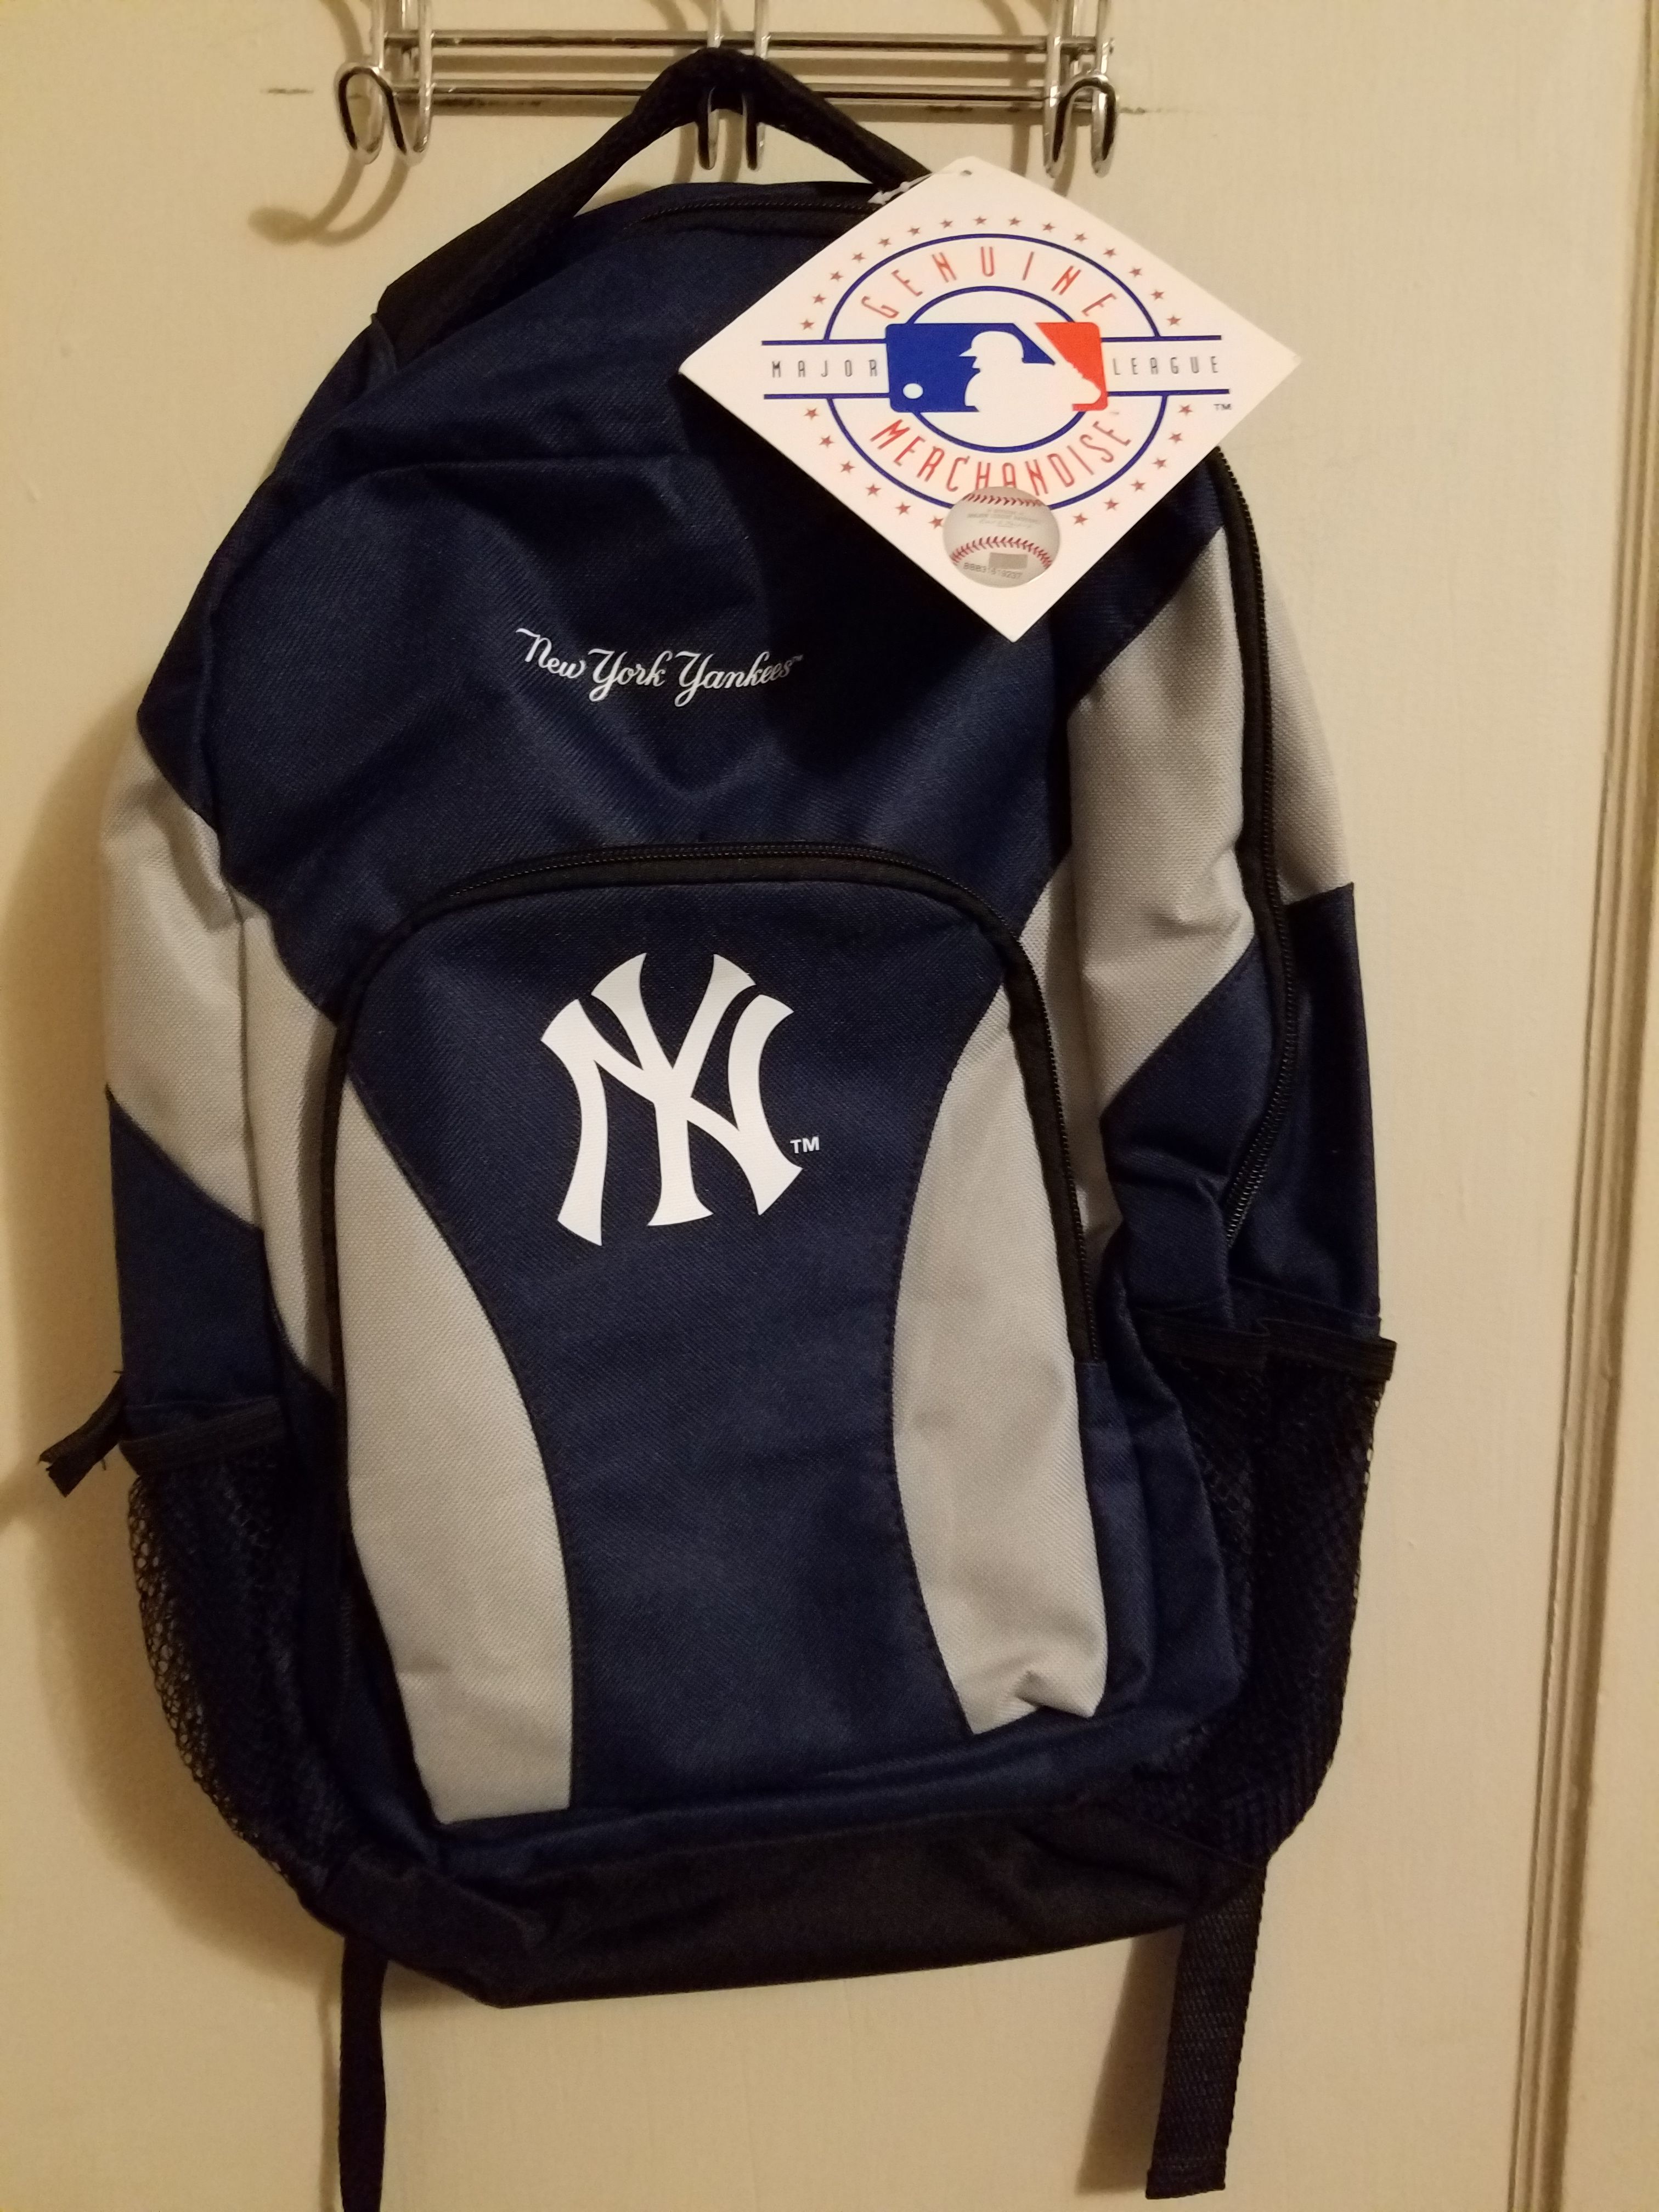 NY Yankees backpack